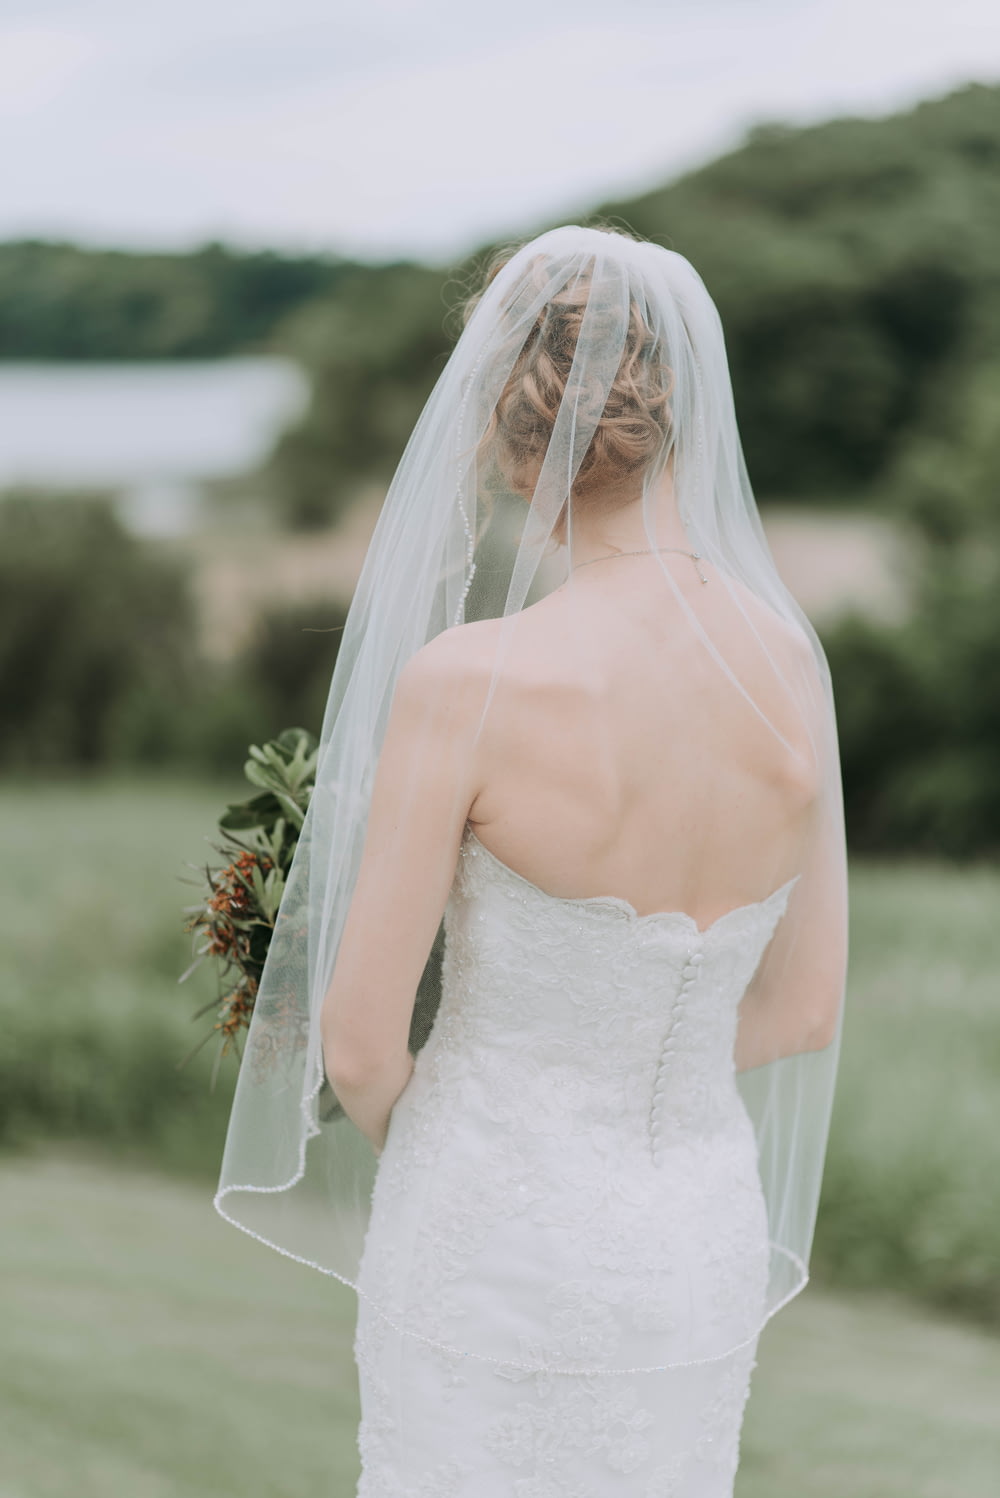 woman wearing white wedding dress holding bouquet